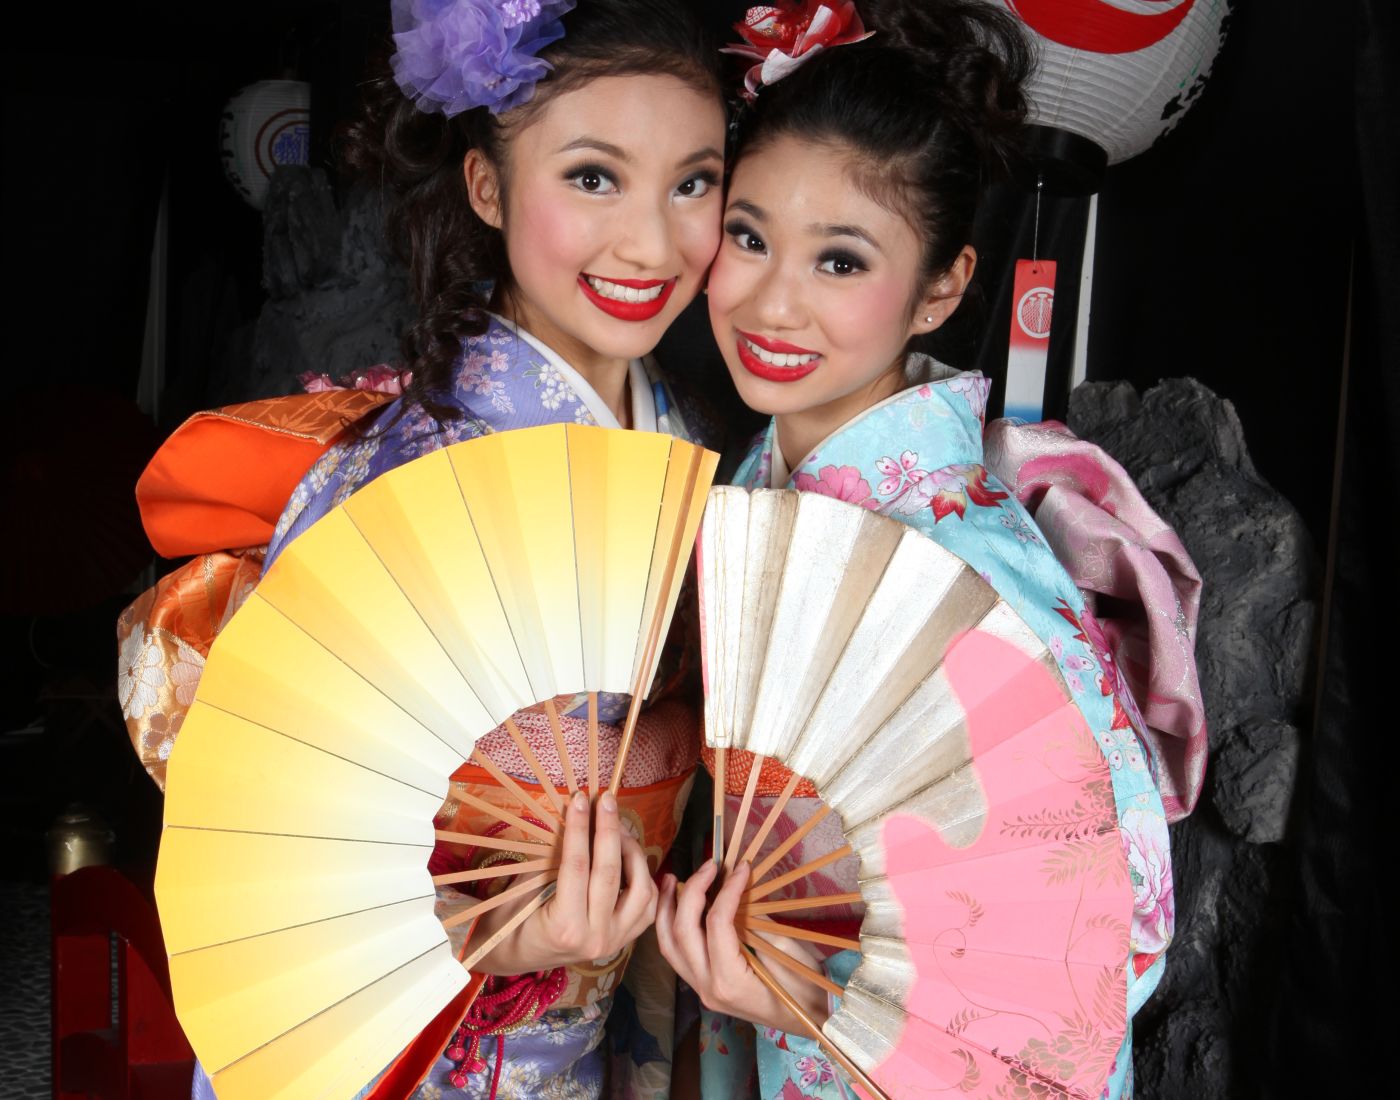 Kimono-Wearing Experience, Maiko/Geisha Makeover Experience